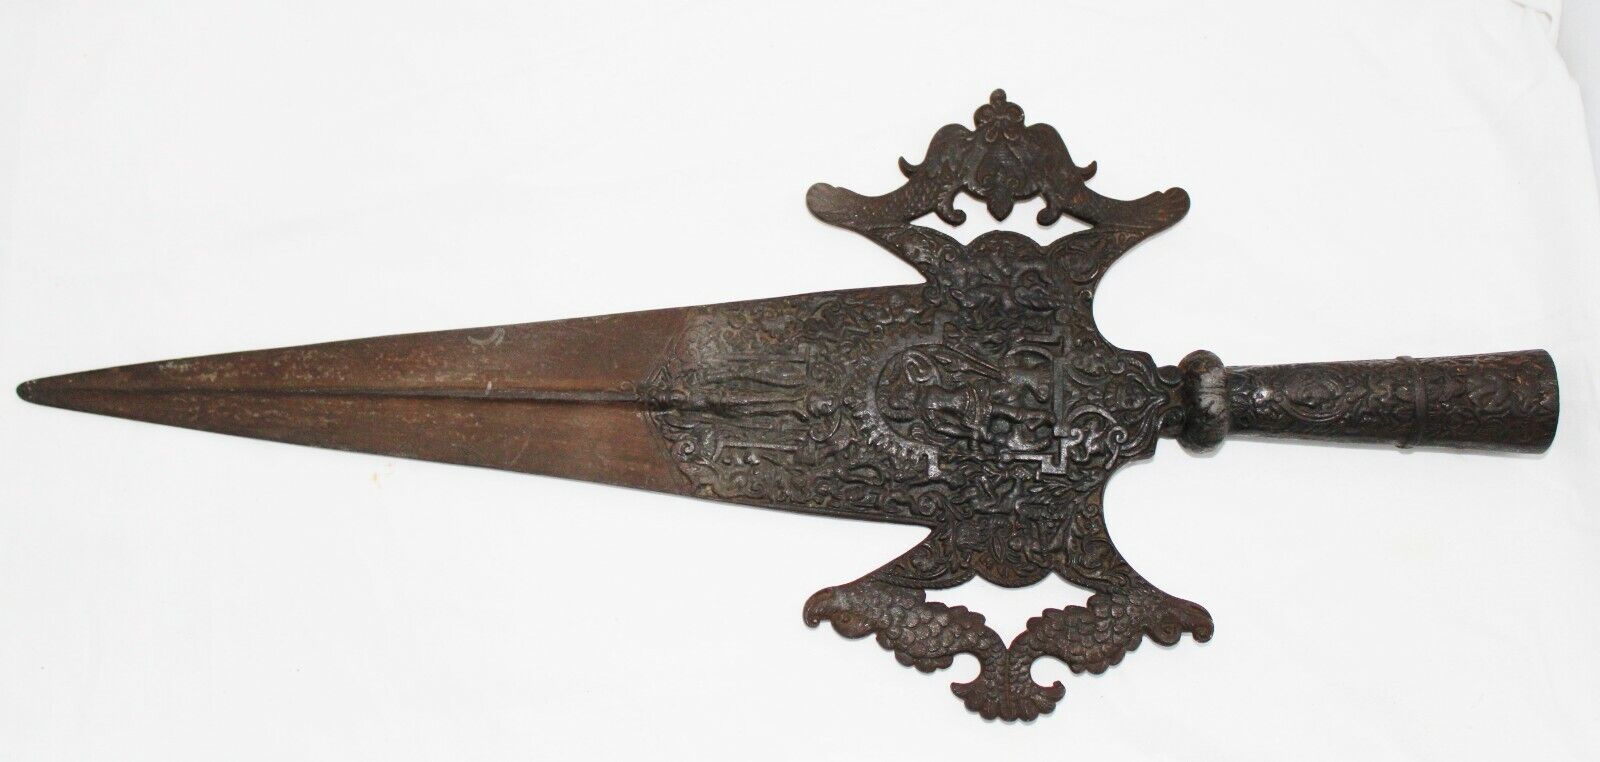 Antique European Partisan Halberd Spear Blade Ornate High Relief Pole arm 